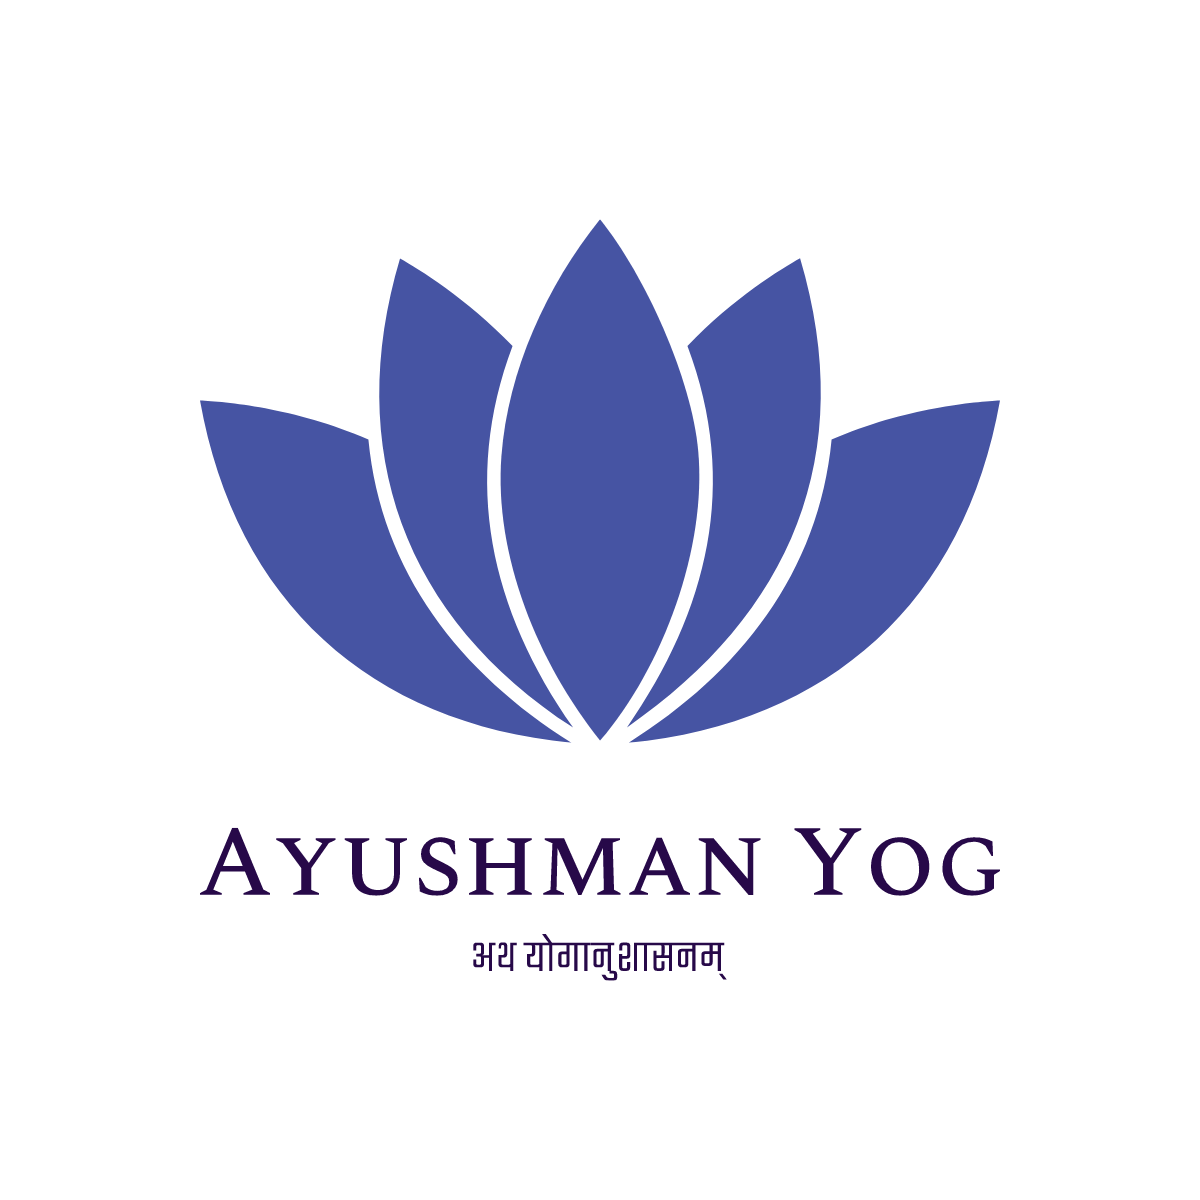 Best Yoga Teaching Course Online | Ayushman Yog